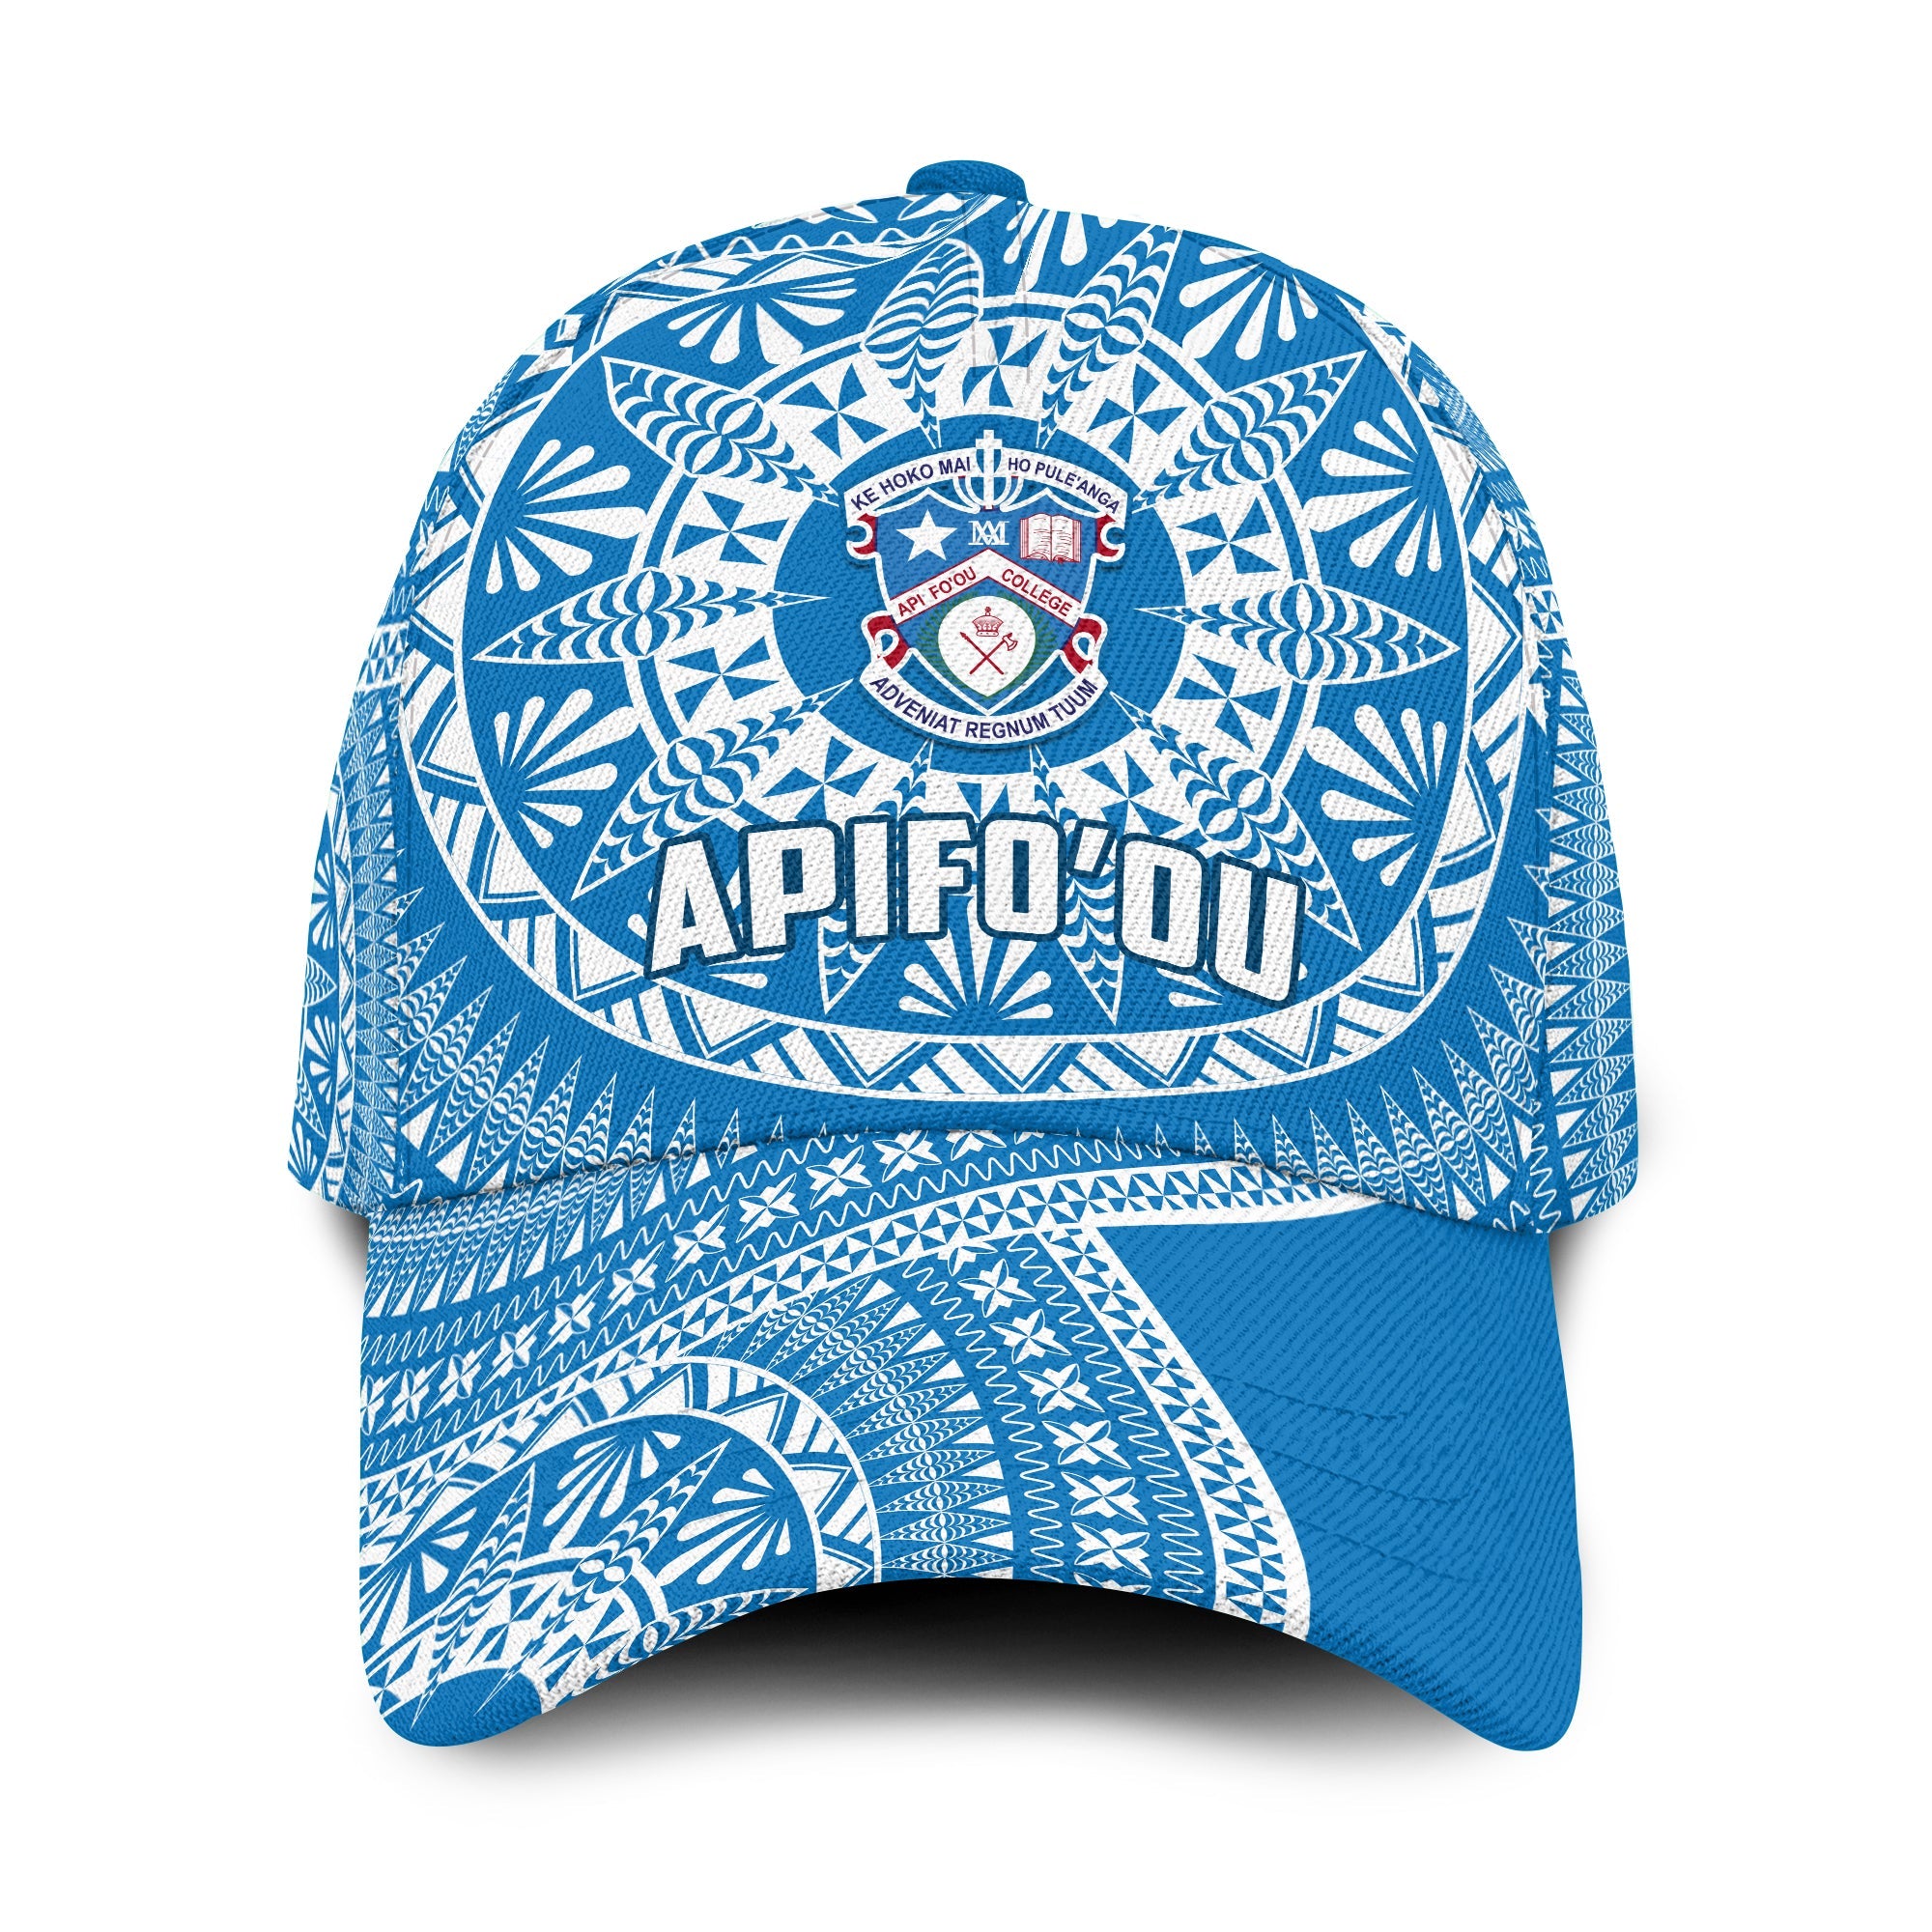 Apifoou Tonga College Classic Cap Tongan Ngatu Pattern Ver.01 LT14 Classic Cap Universal Fit Blue - Polynesian Pride